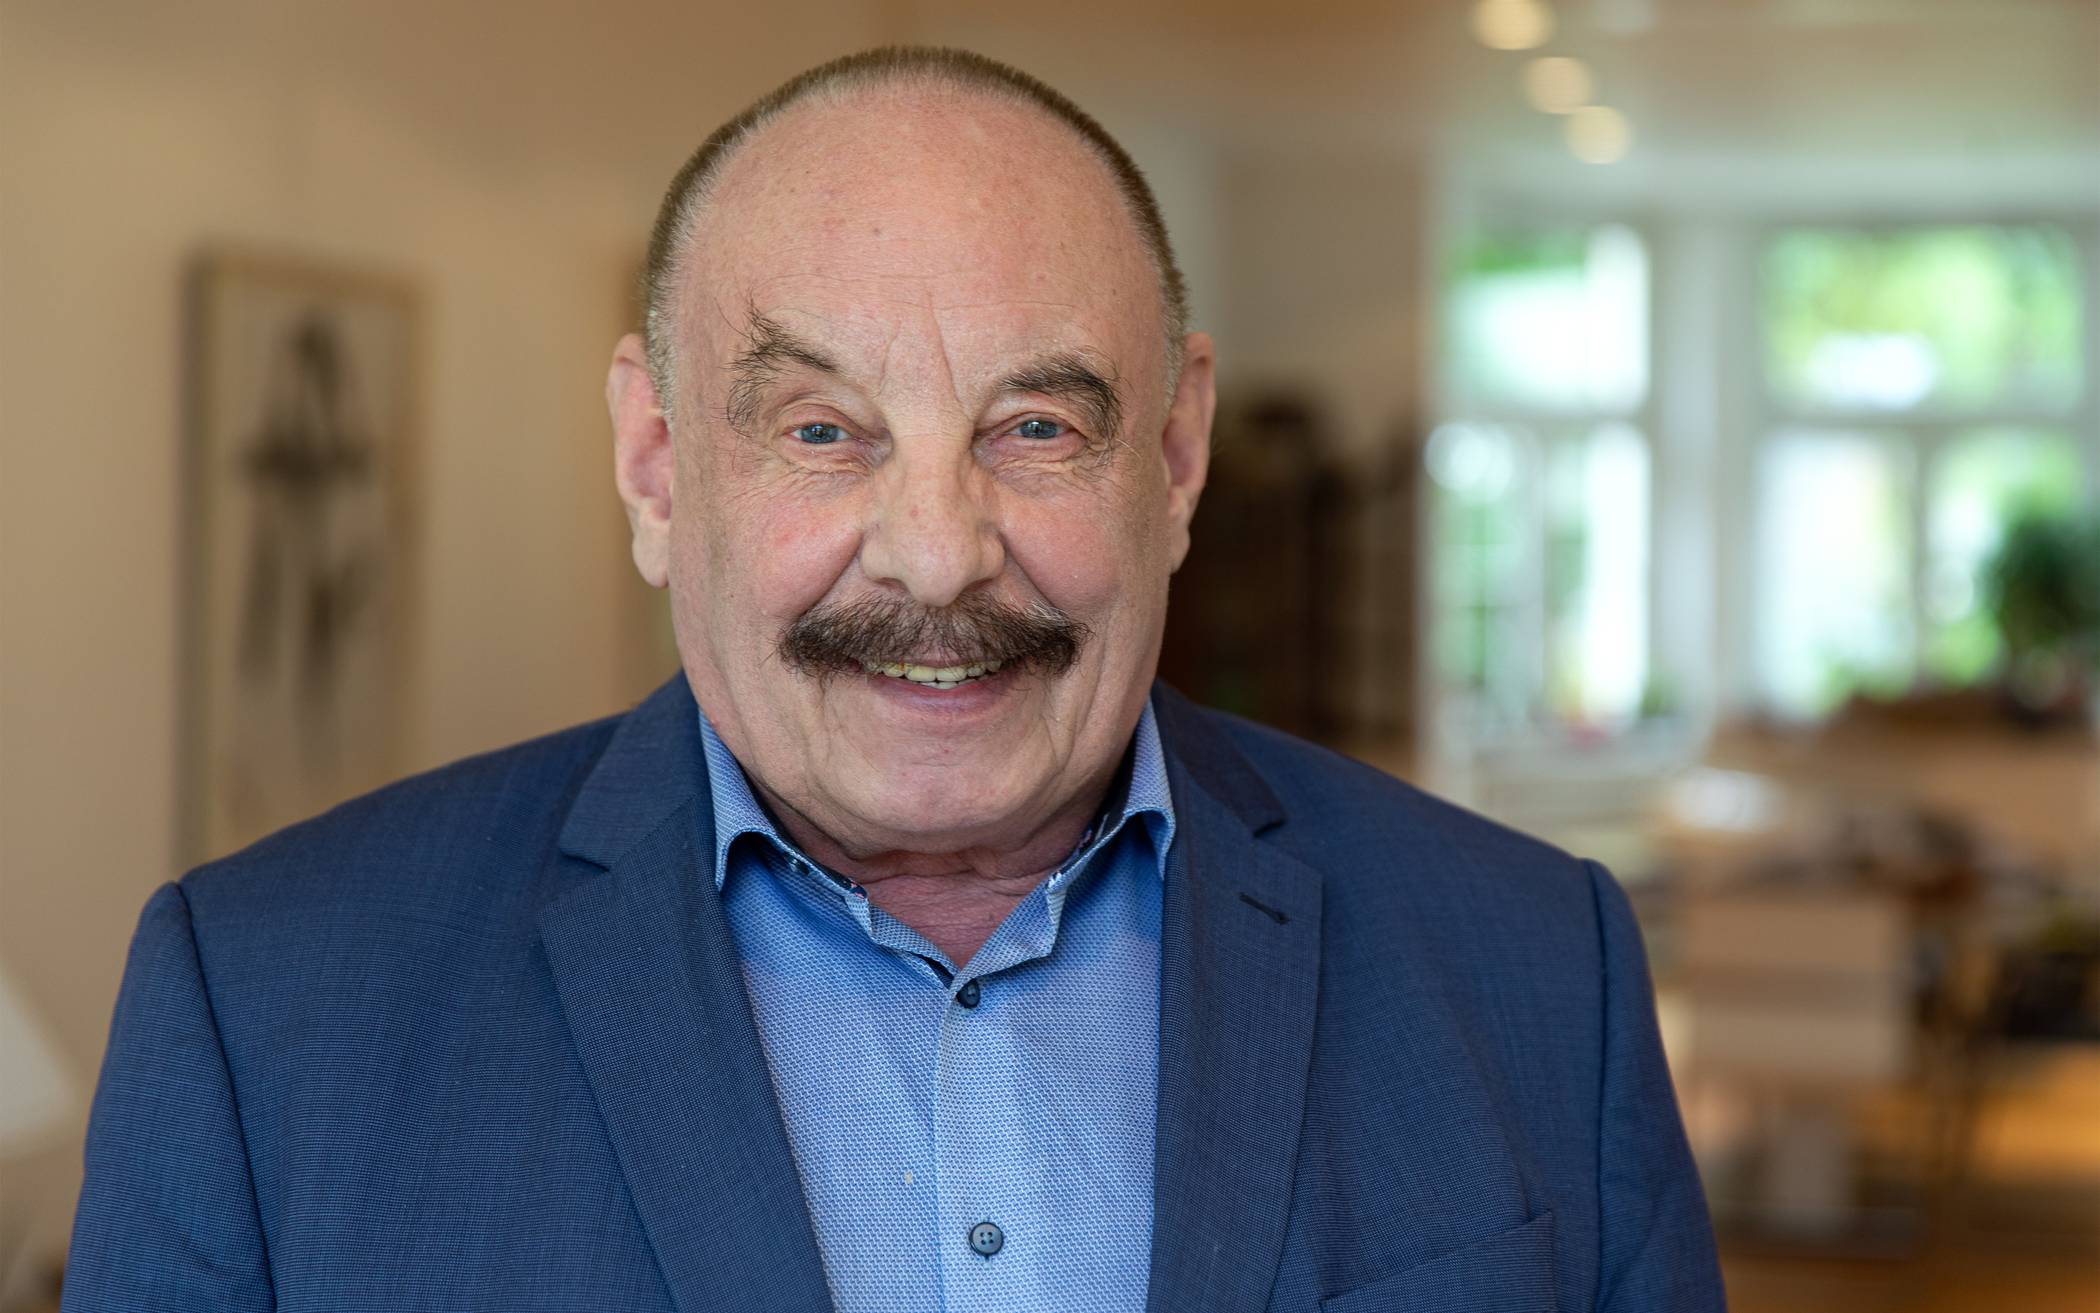  Prof. Dr. Hartmut Gülker hat offiziell den Vorsitz der Wuppertaler Herzinitiative übernommen. 